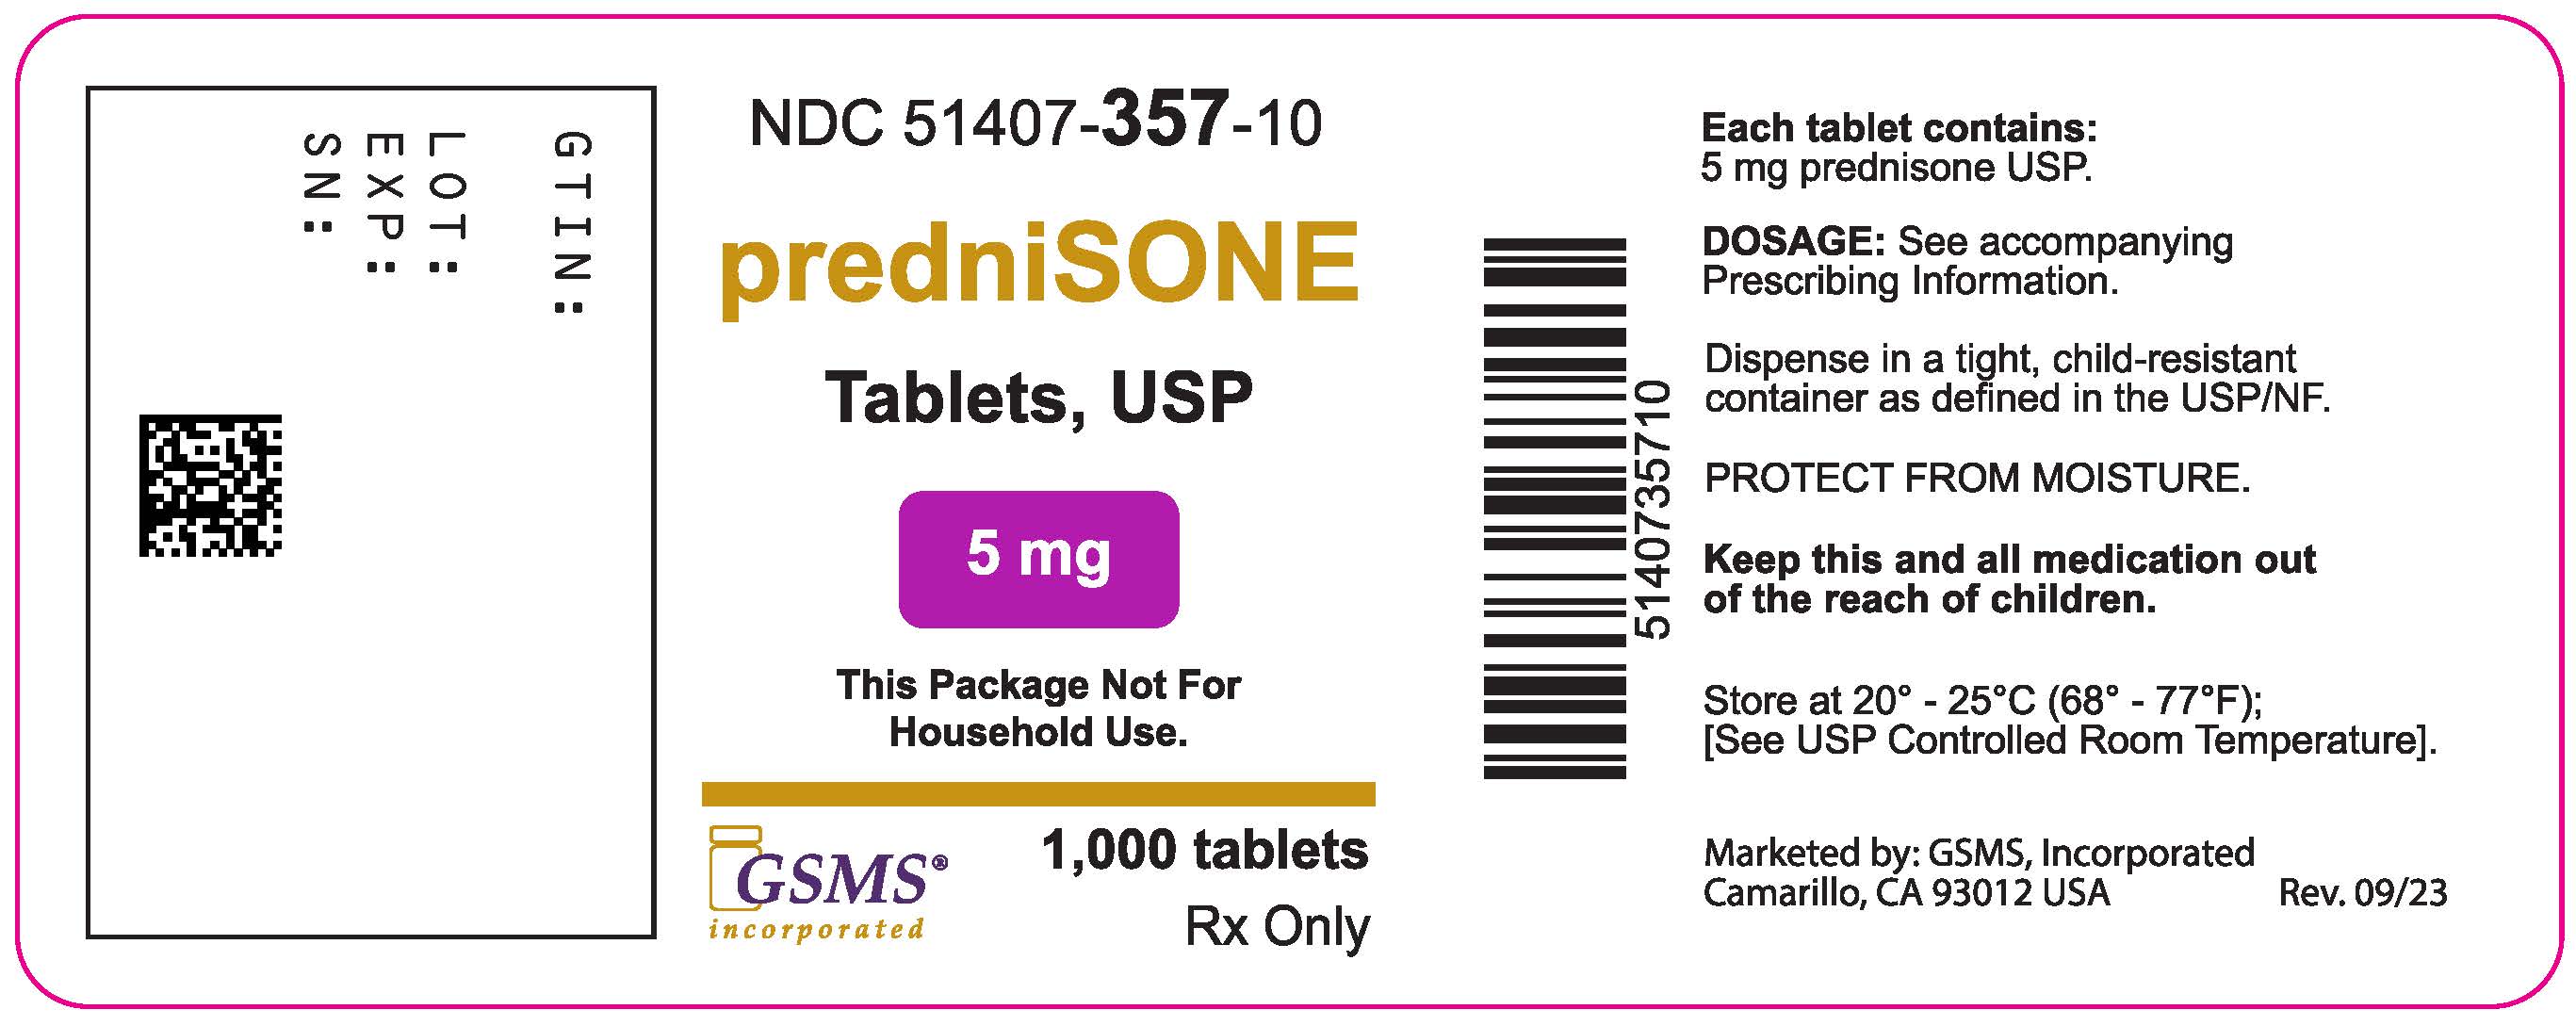 51407-357-10LB - Prednisone Tablets - Rev. 0923.jpg